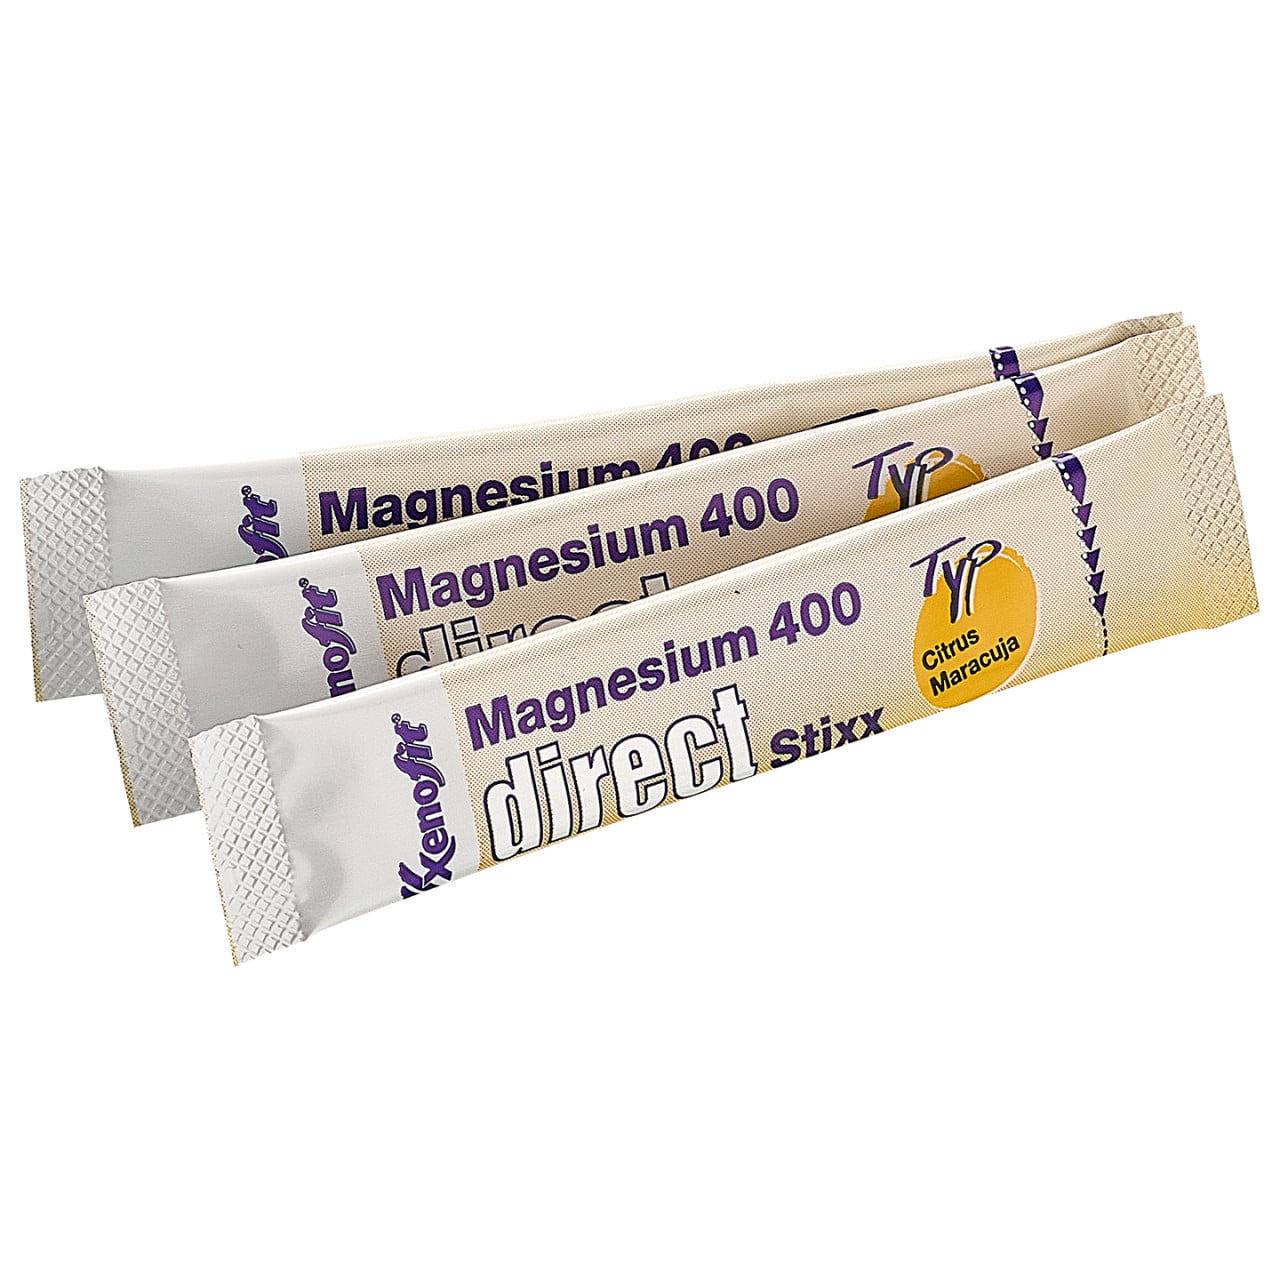 Magnesium 400 Granules Direct Stixx (25 sachets)